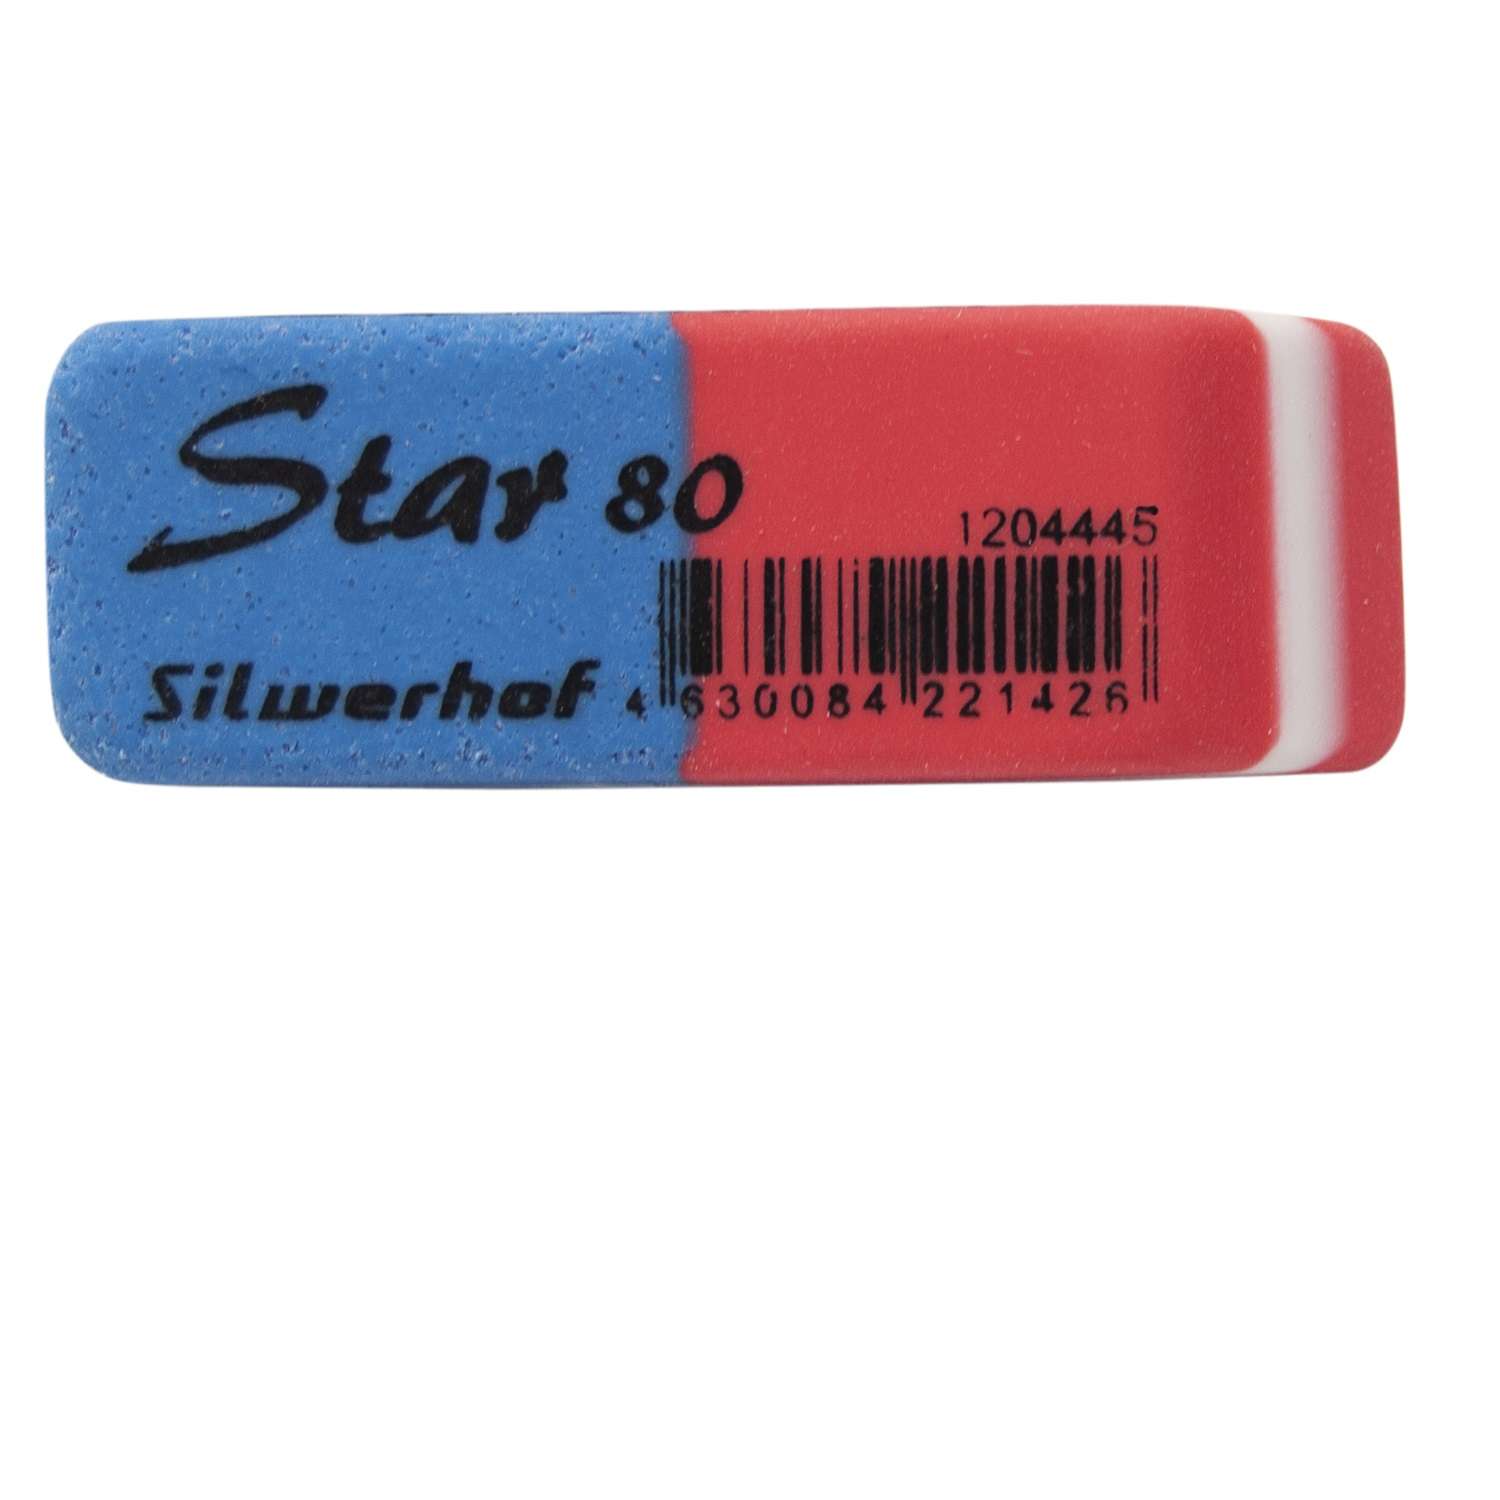 Ластик Silwerhof Star80 Синий 1204445 - фото 1